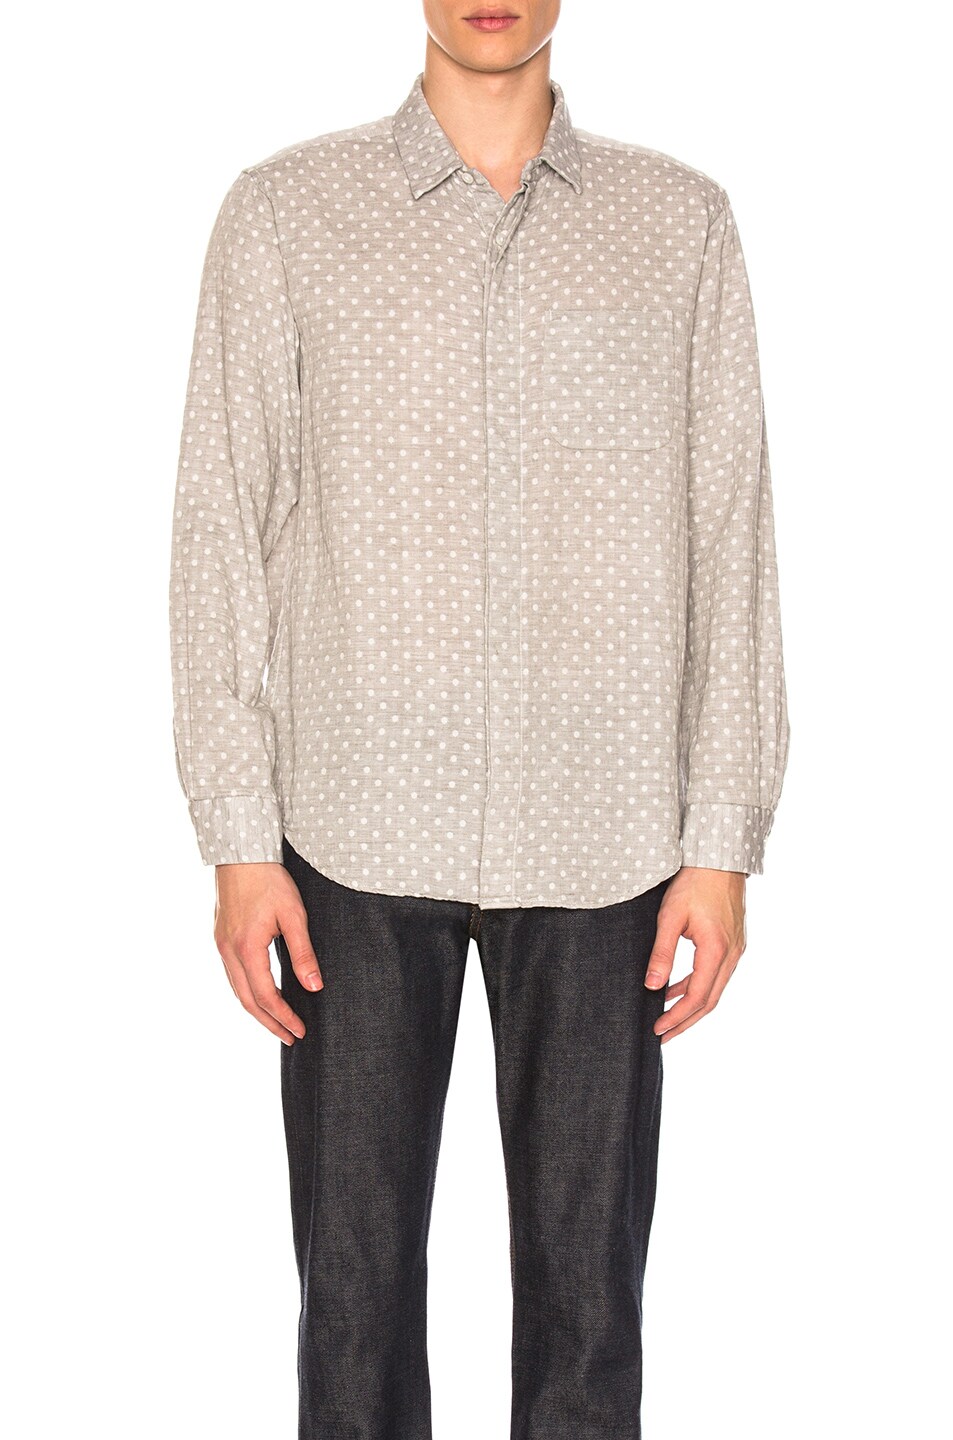 Image 1 of Engineered Garments Double Gauze Short Collar Shirt in Heather Grey Polka Dot